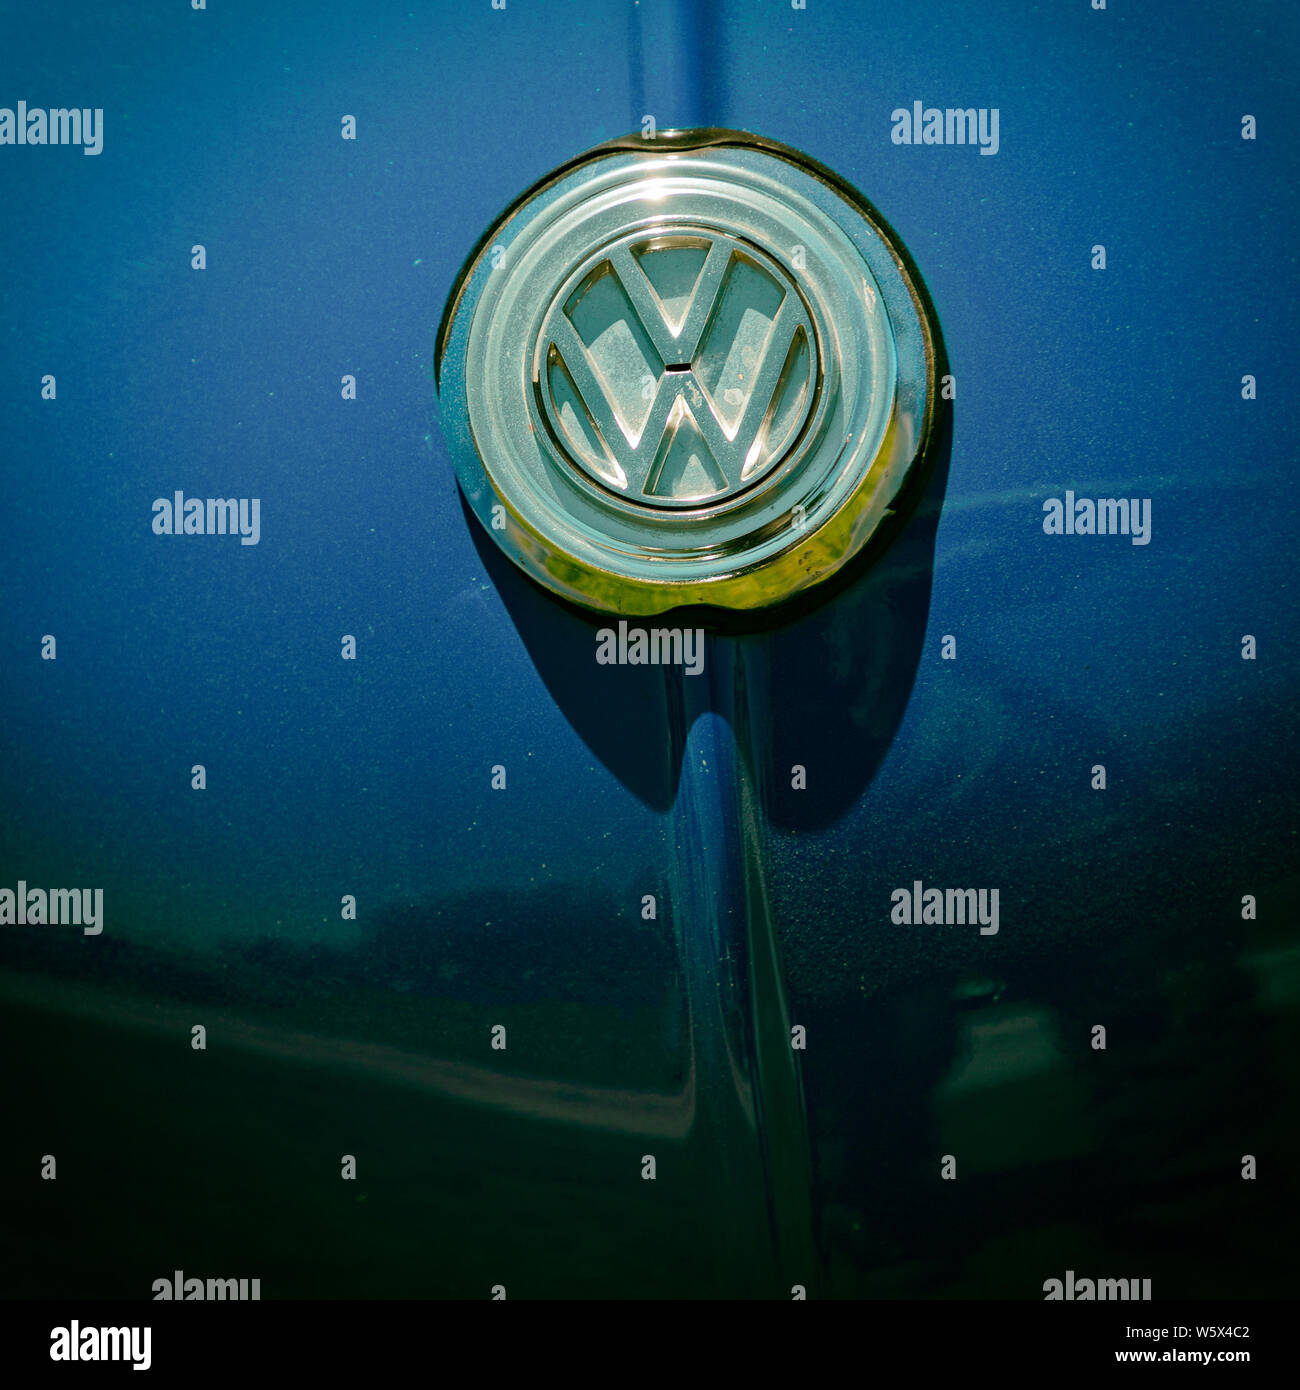 1971 Karmann Ghia, Volkswagen close-up of VW logo Stock Photo